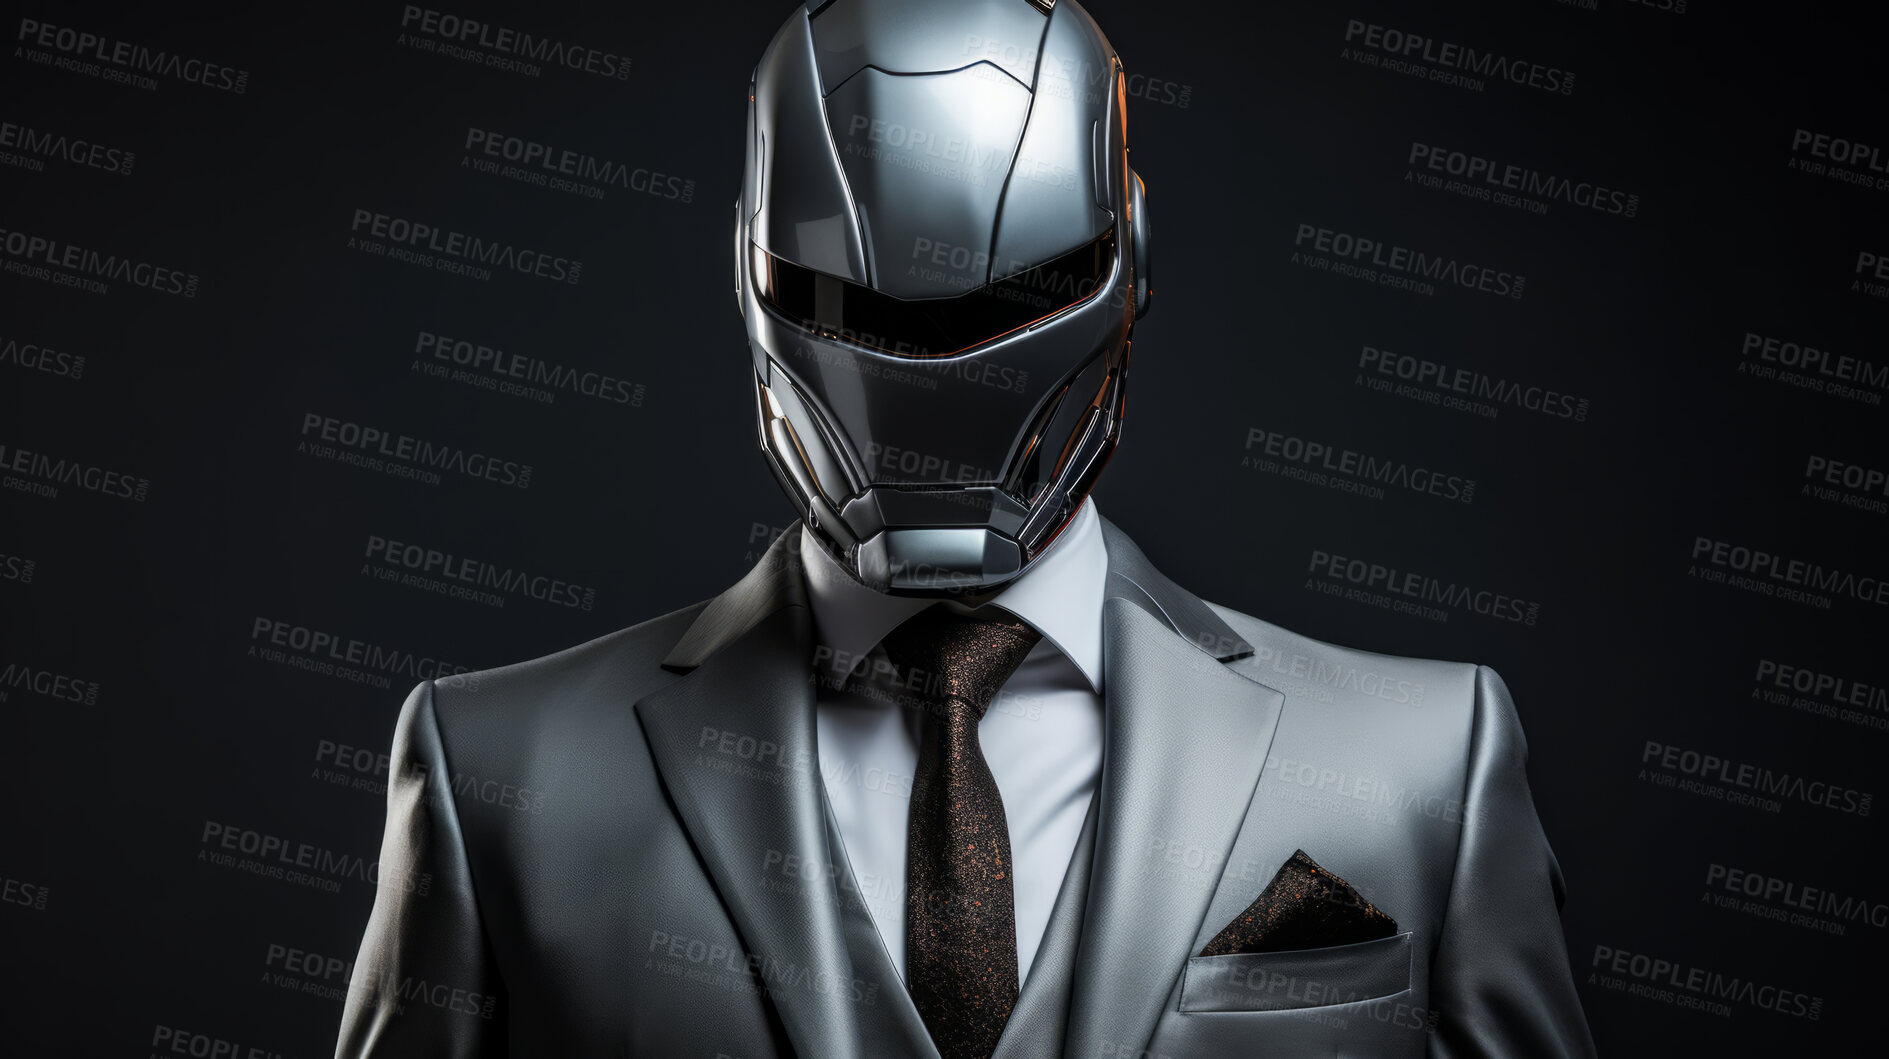 Buy stock photo Cyborg, robotic figure in business suit, futuristic metaverse concept against black backdrop